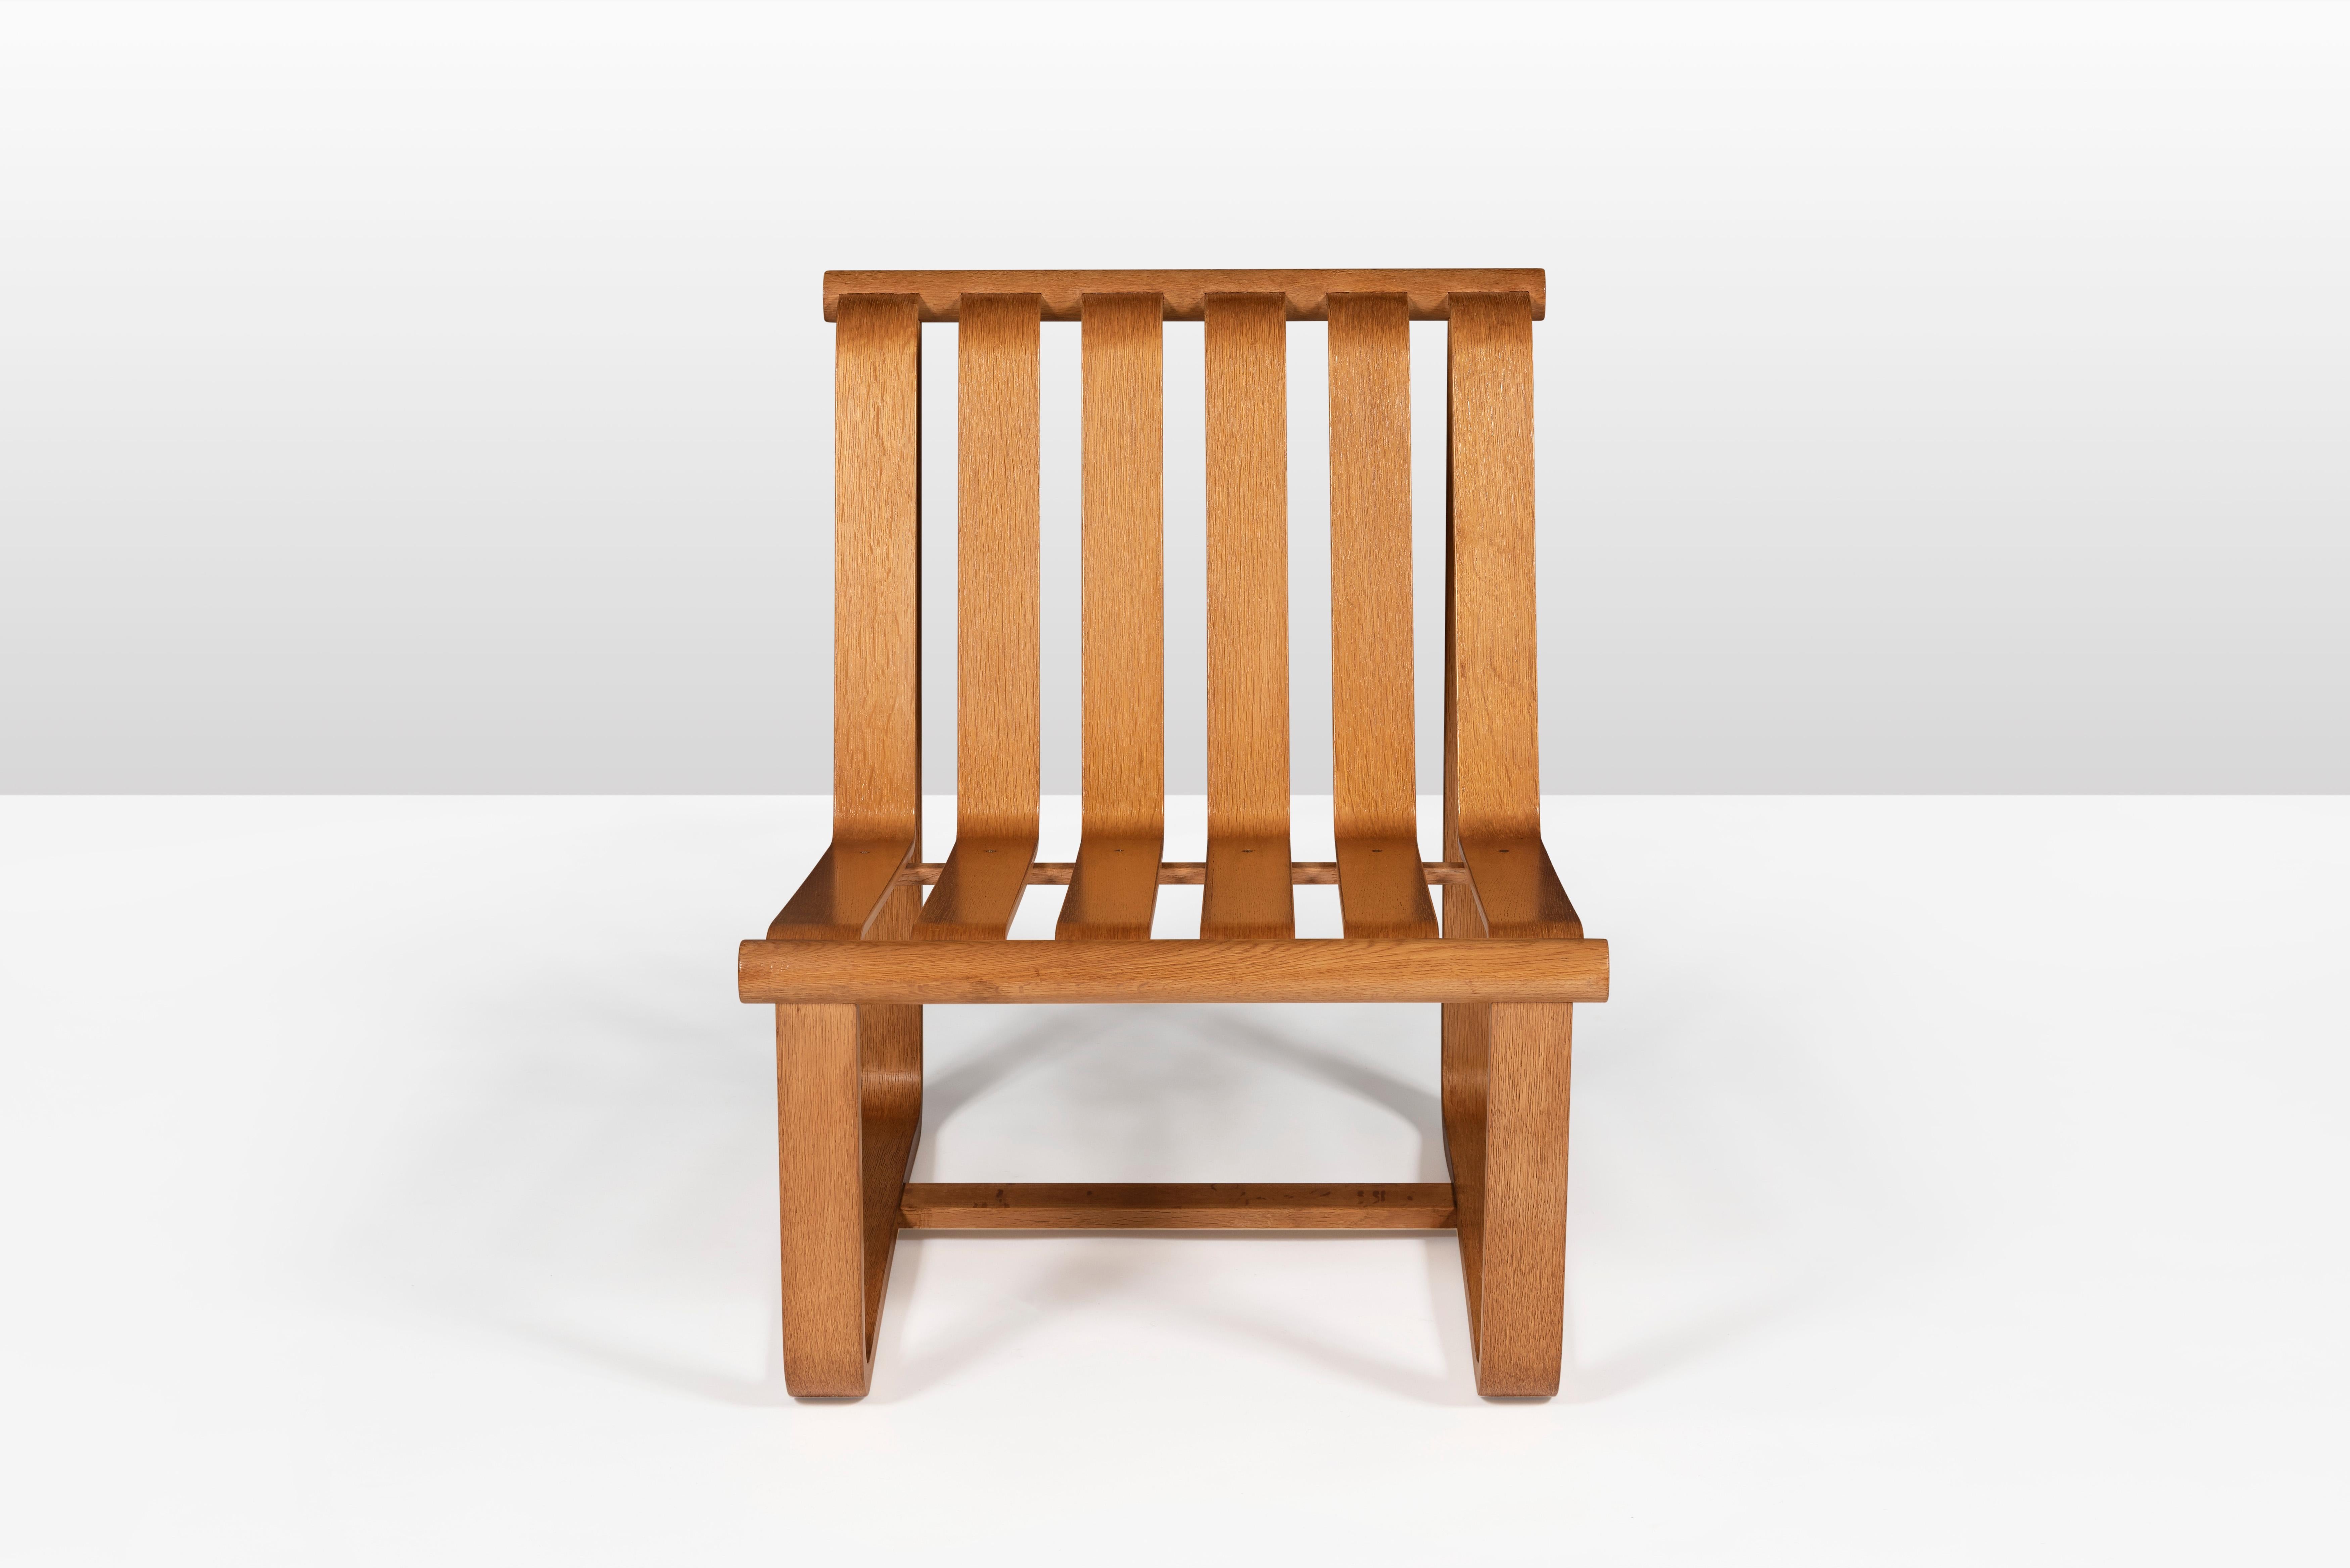 Japanese Lounge Chair by Katsuo Matsumura